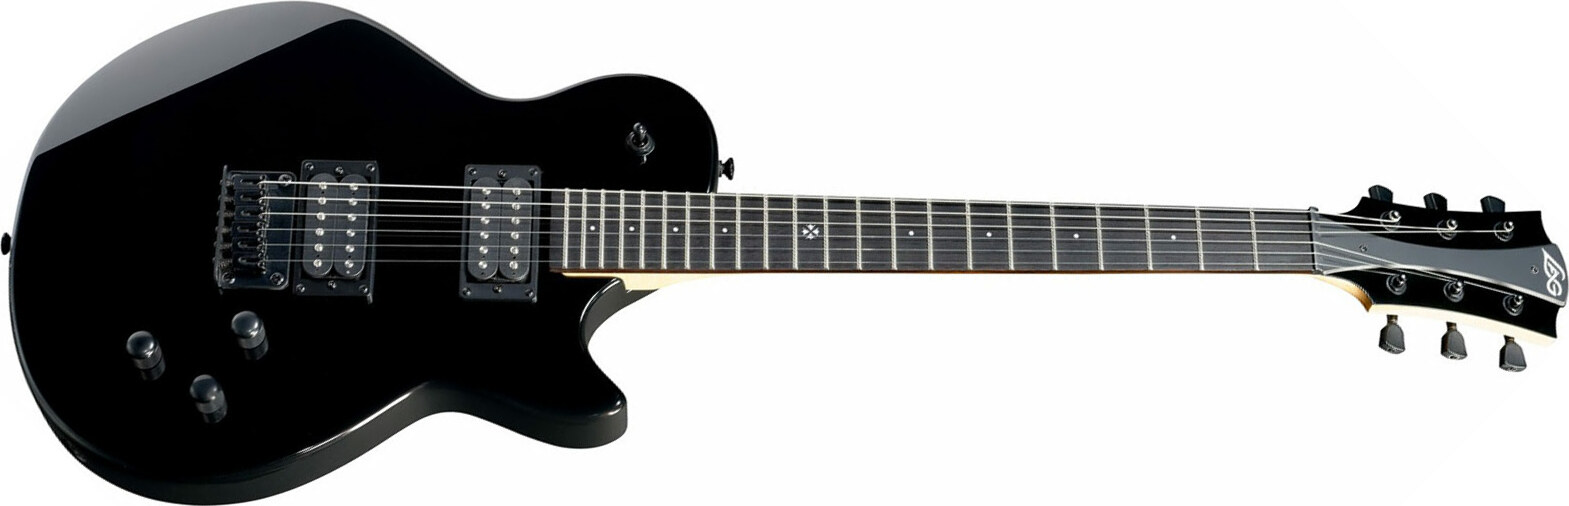 Lag Imperator 60 Hh Ht Rw - Black - Enkel gesneden elektrische gitaar - Main picture